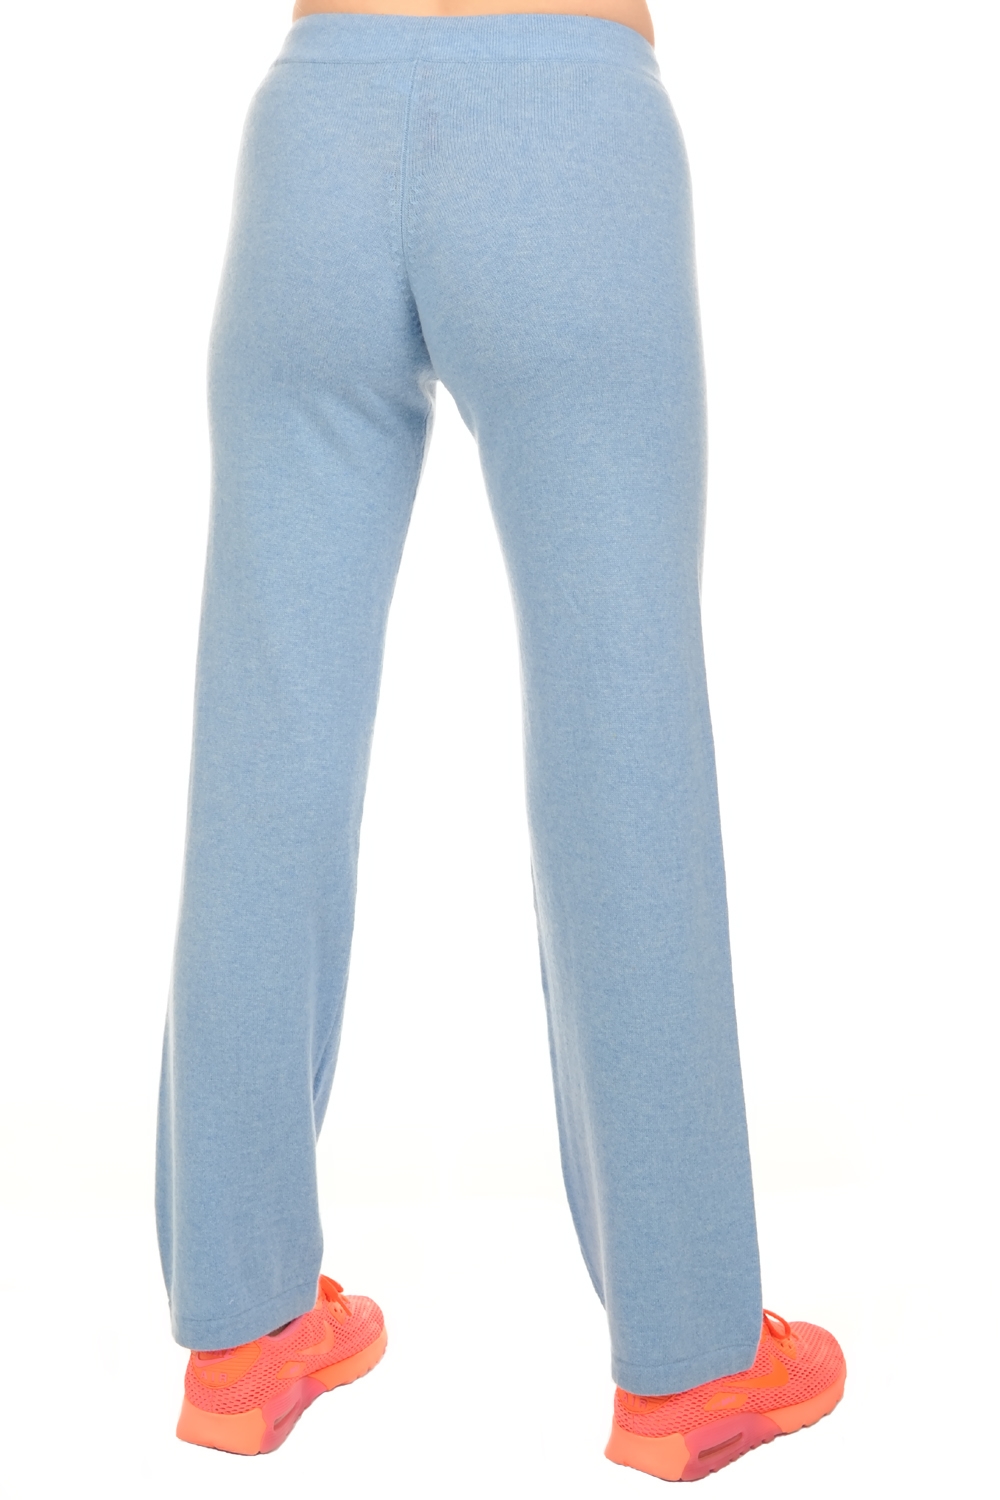 Cachemire pantalon legging femme malice bleu azur chine 3xl